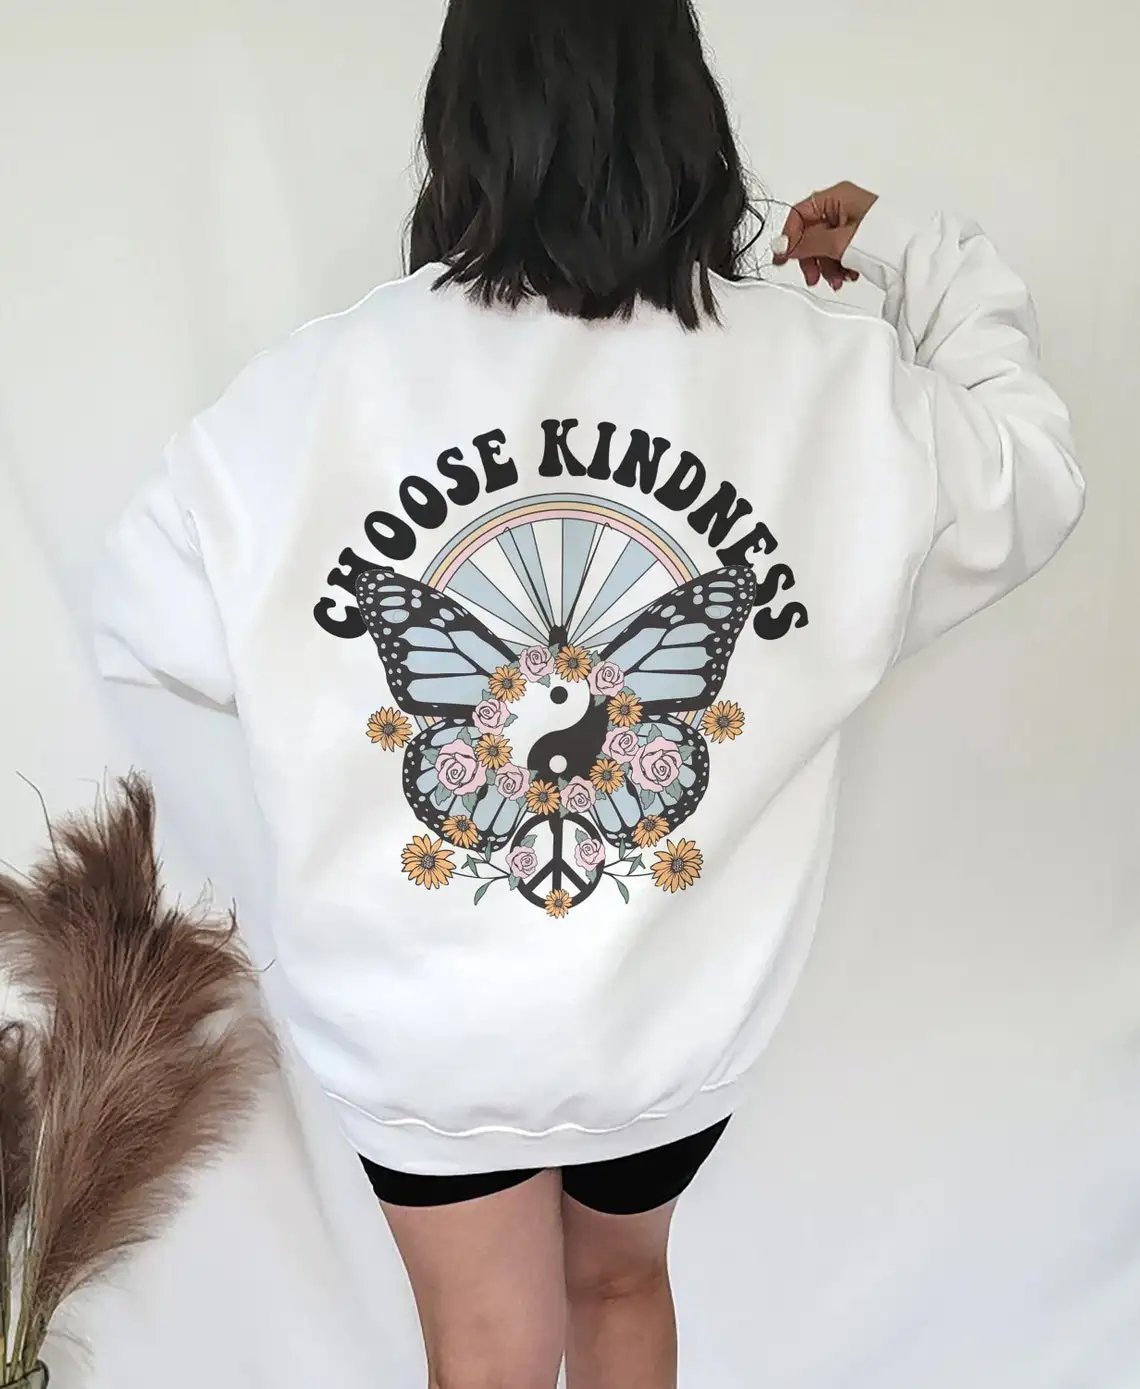 colored choose kindness sweatshirt retro women long sleeve inspirational Positive pullovers